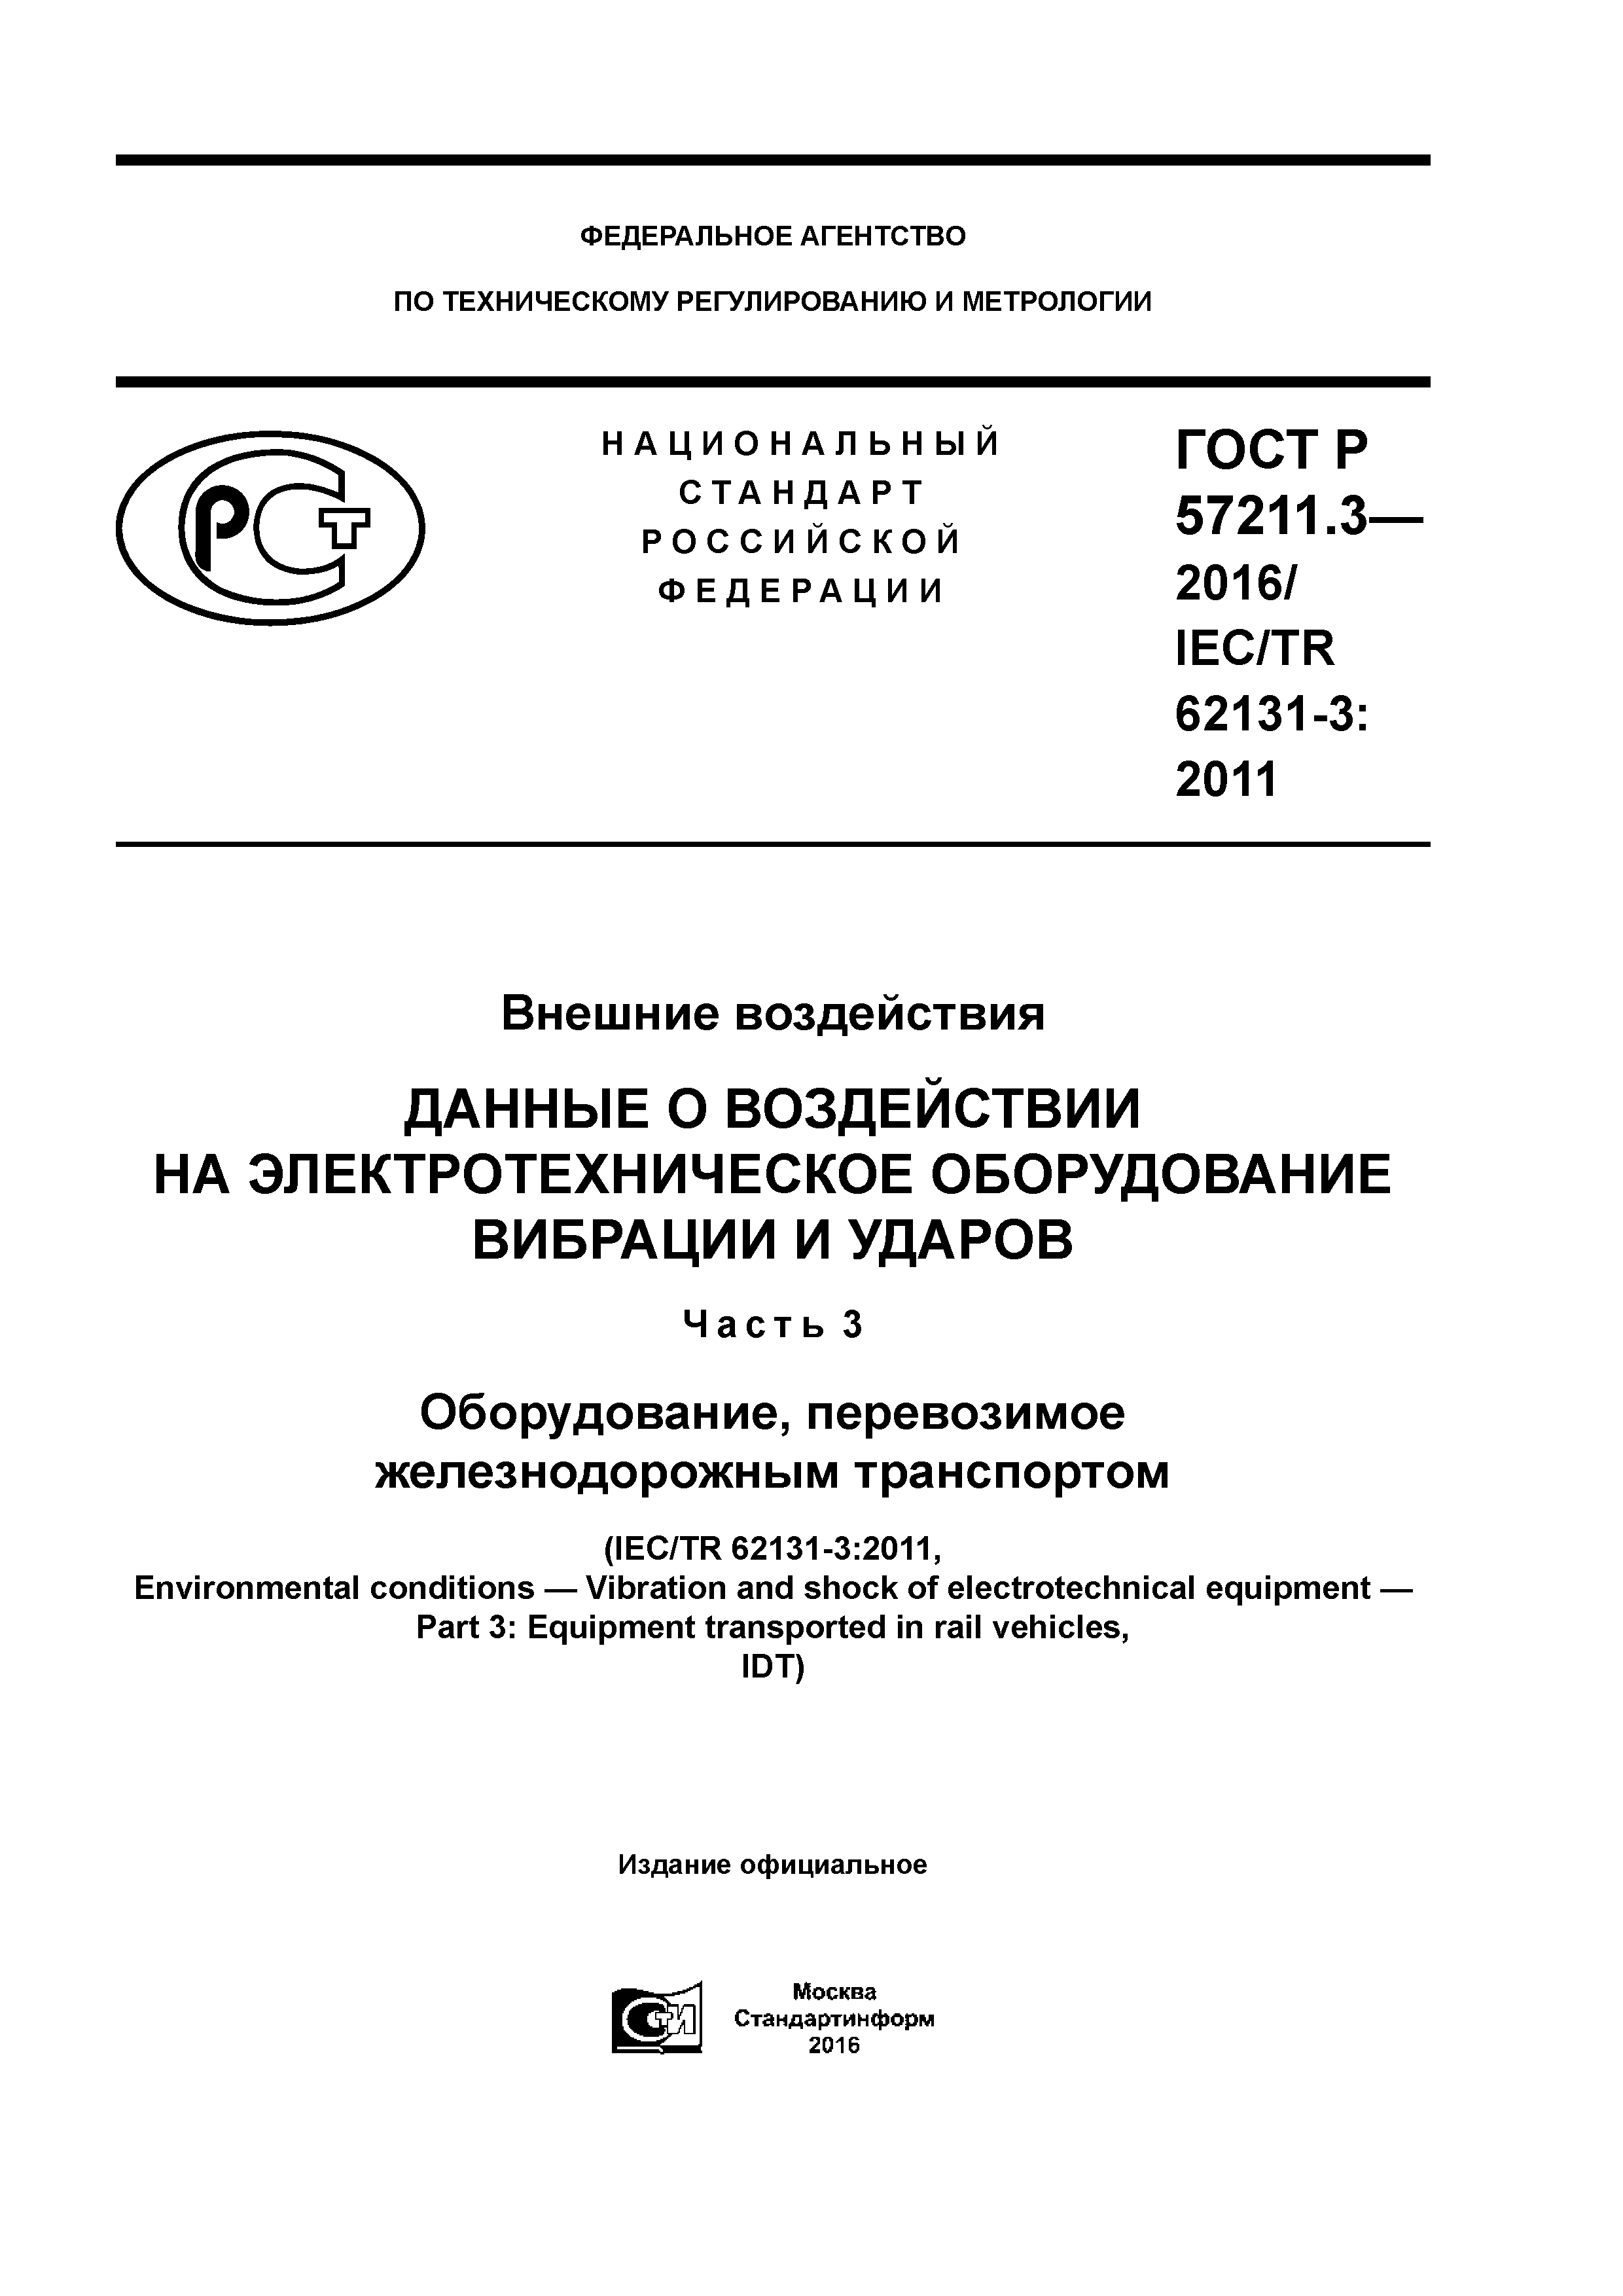 ГОСТ Р 57211.3-2016